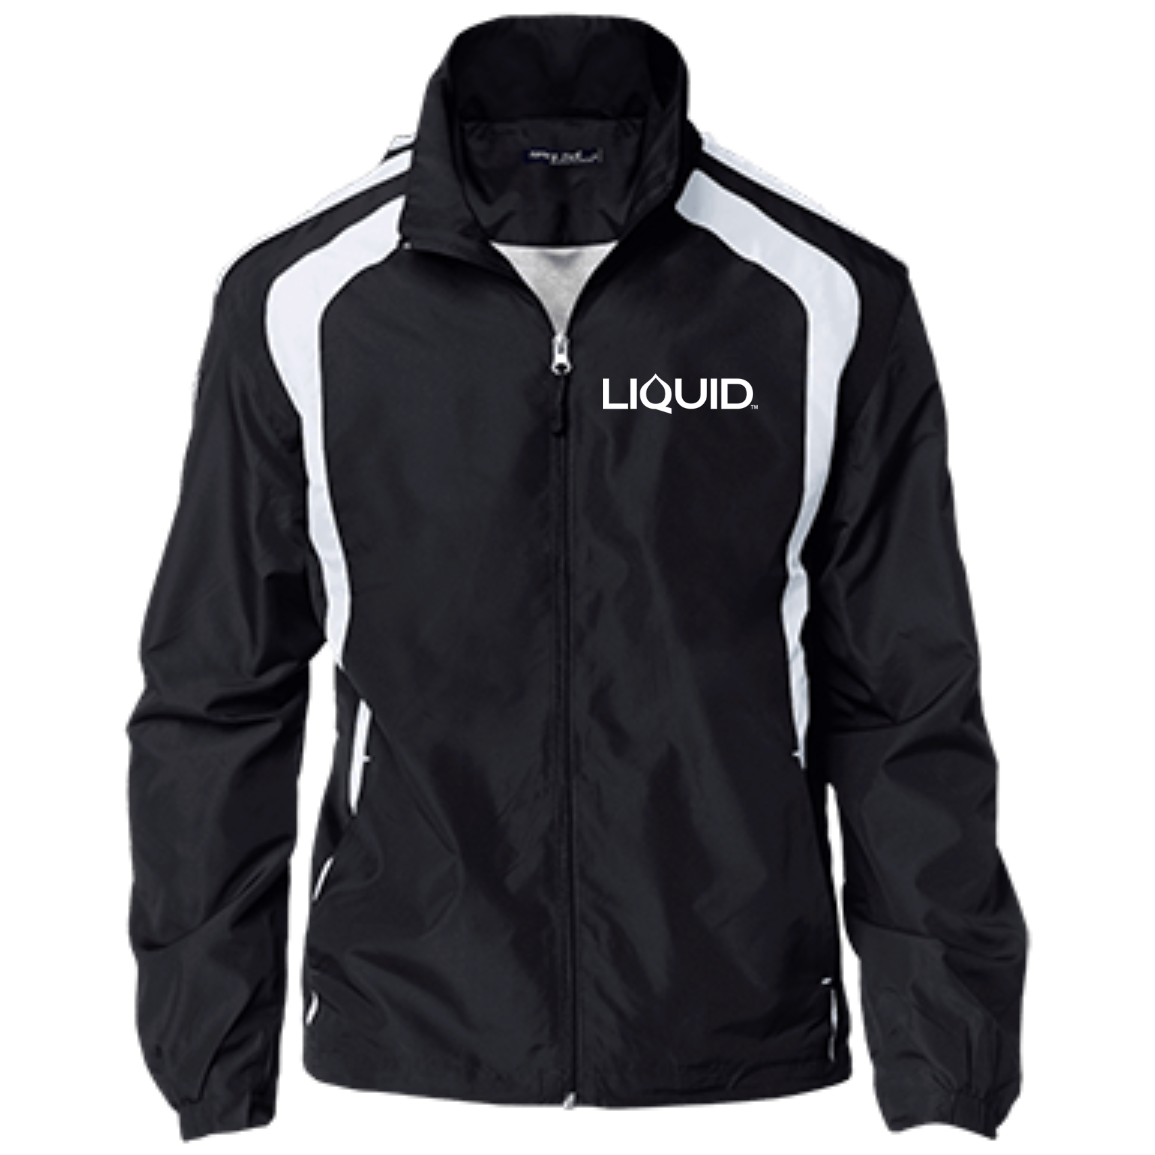 YST60 Youth Colorblock Jacket - Liquid Hydration Gear